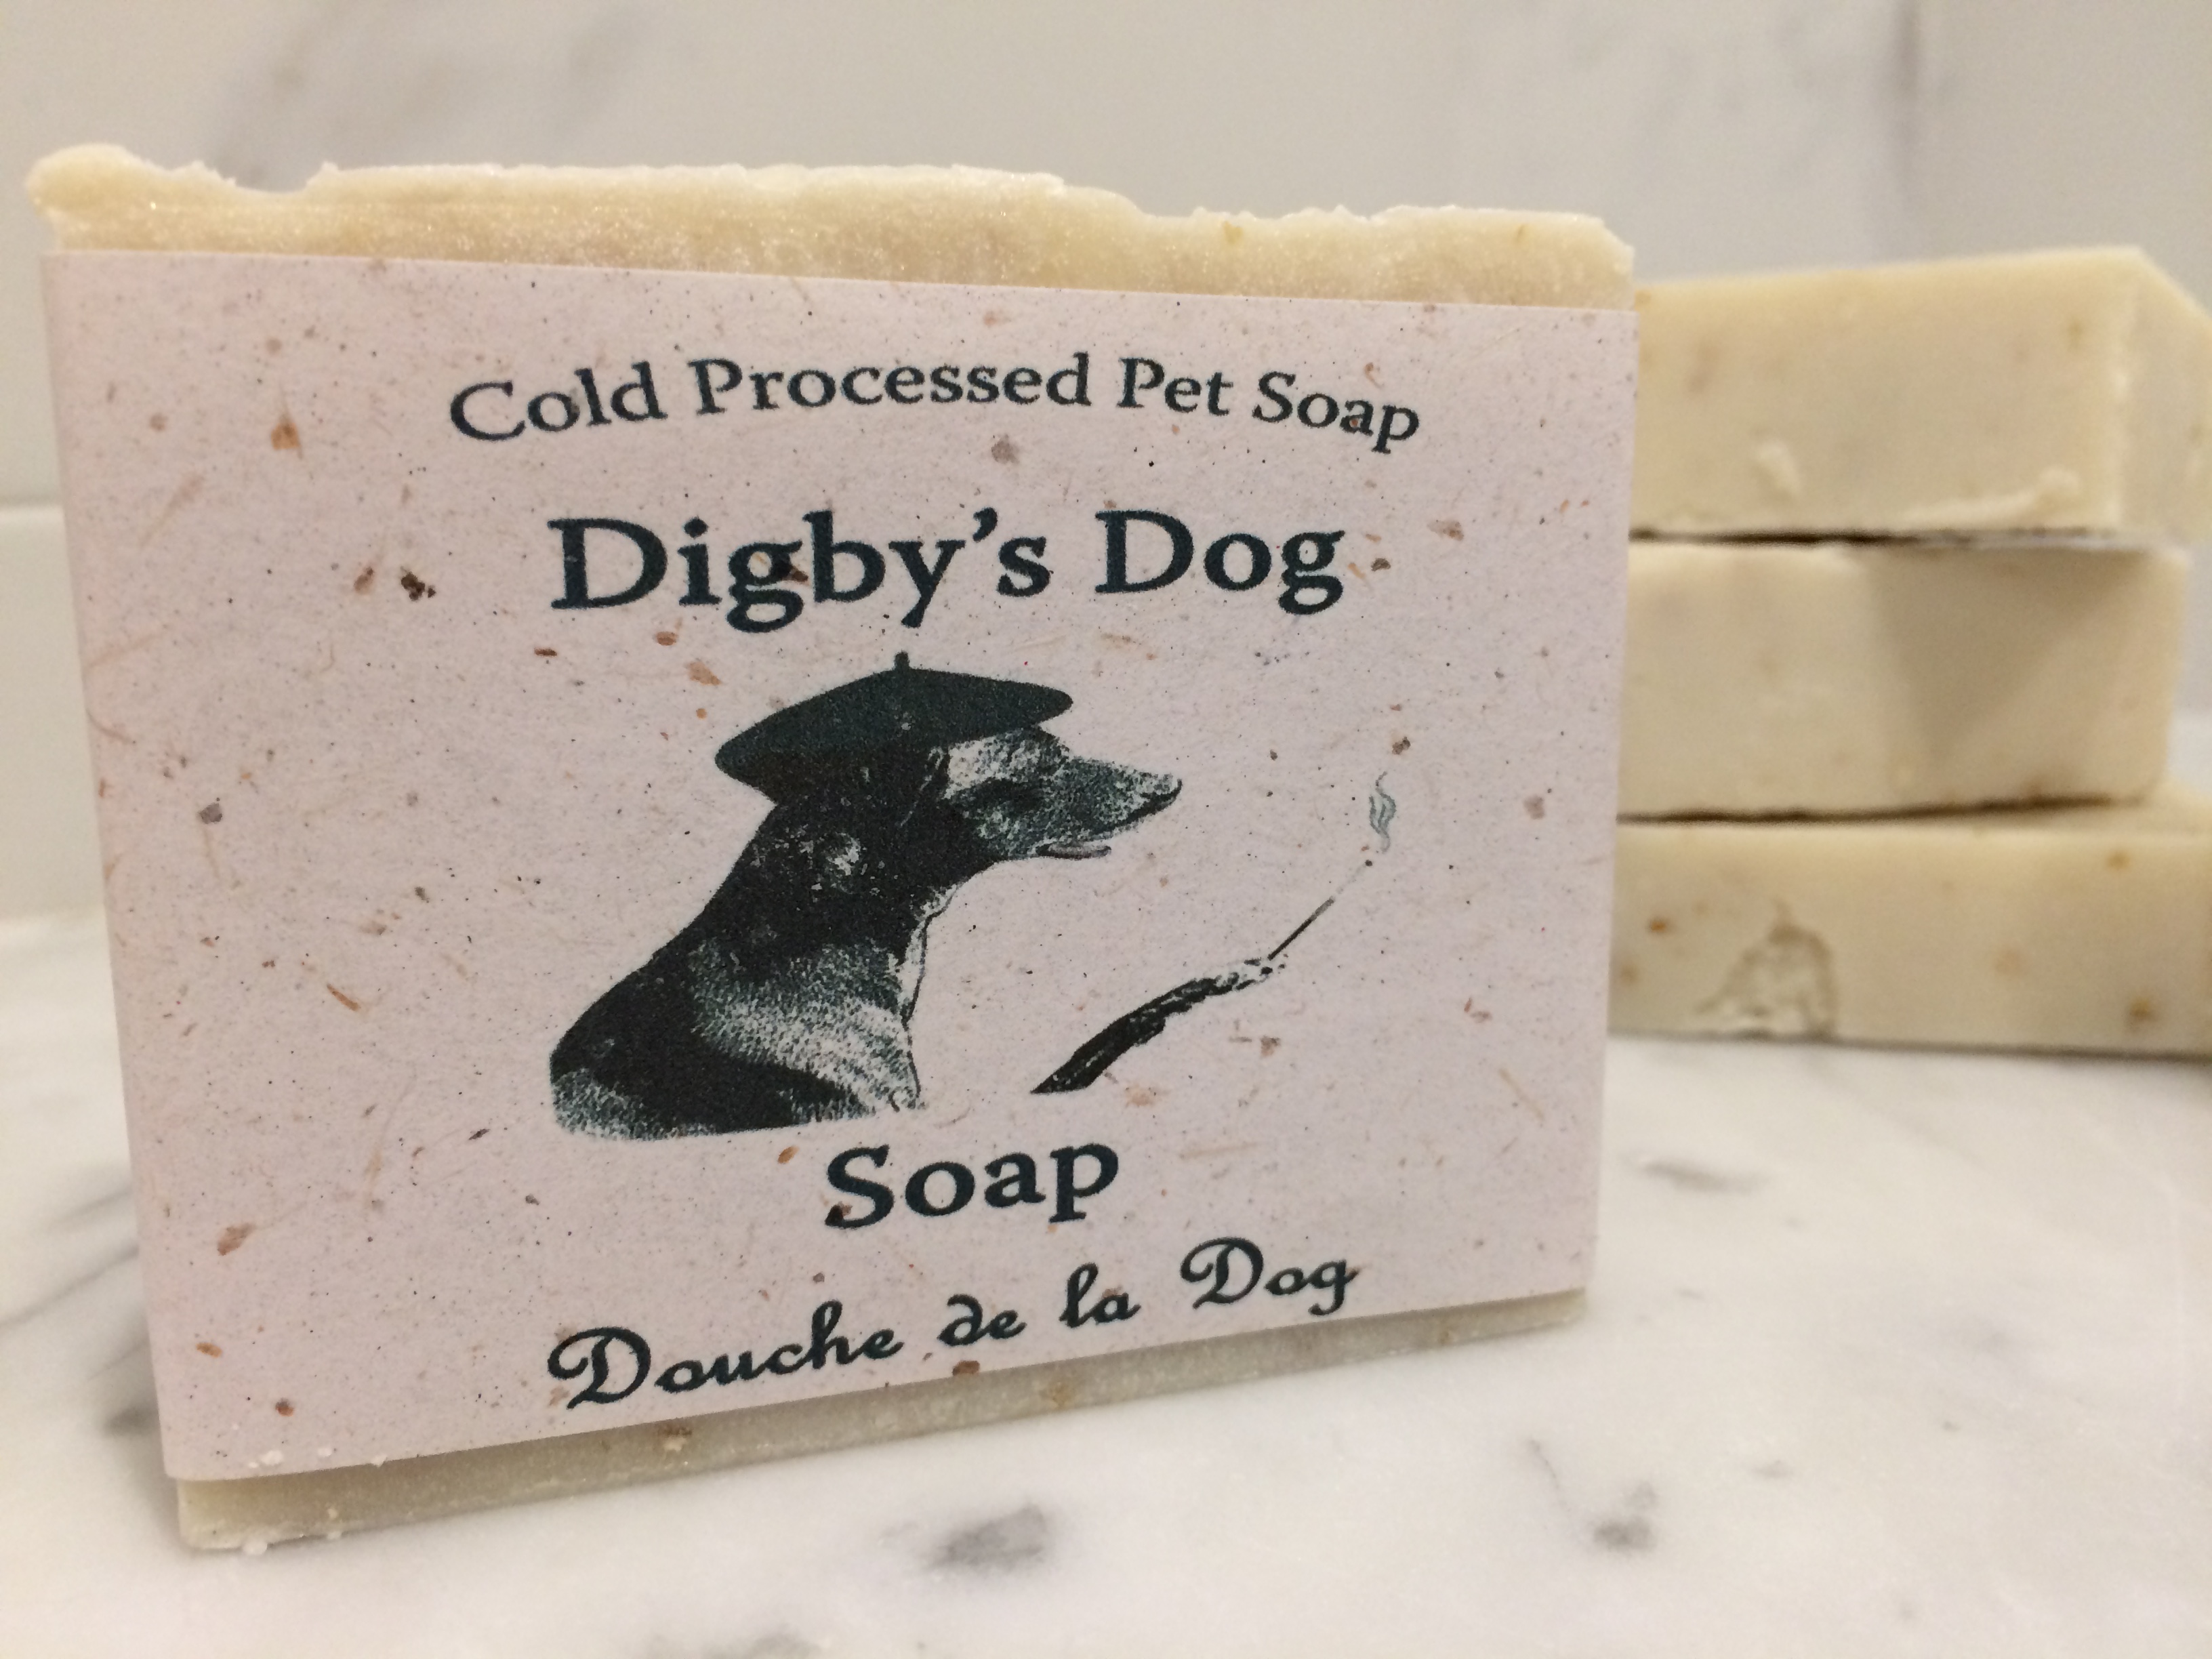 Digby's doggie soap